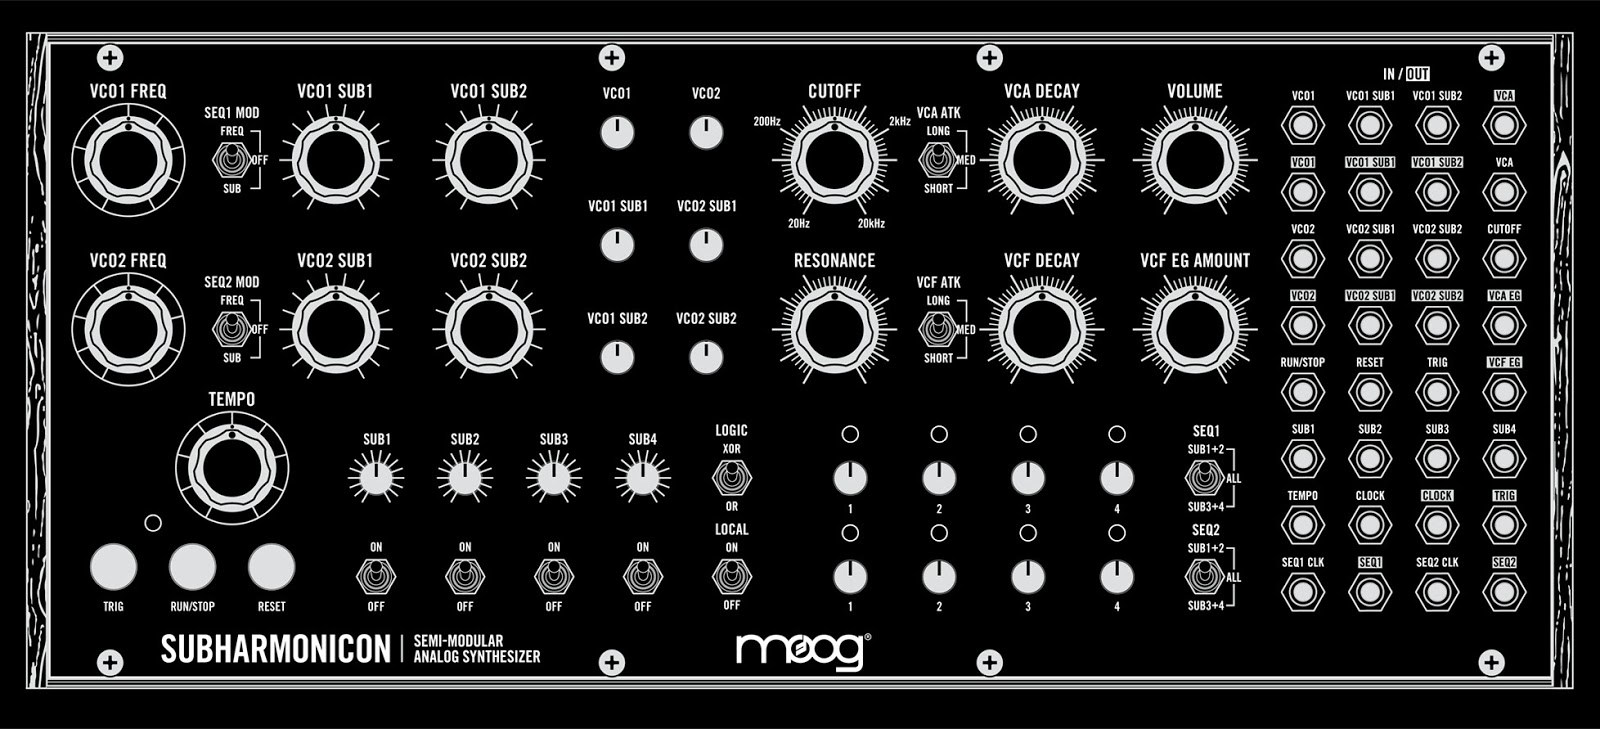 subharmonicon-semi-modular-analog-synthesizer.jpg